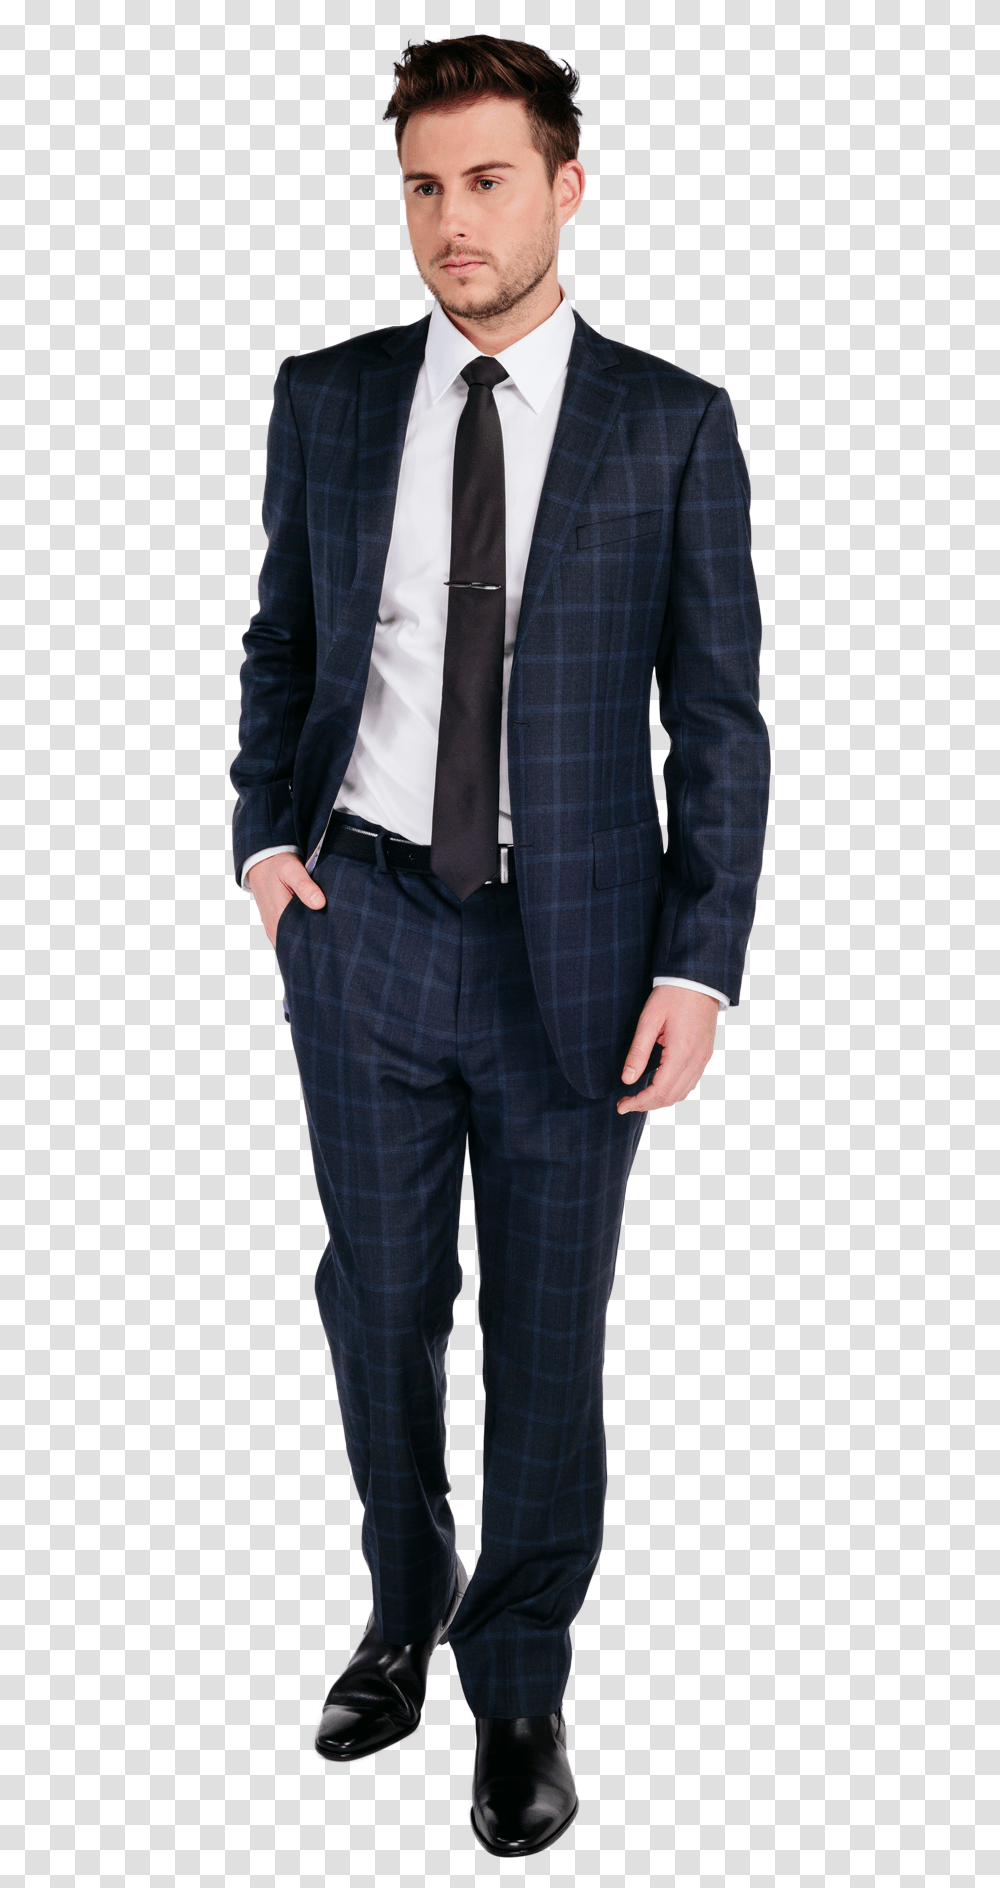 Full Body Man In Suit, Tie, Accessories, Overcoat Transparent Png